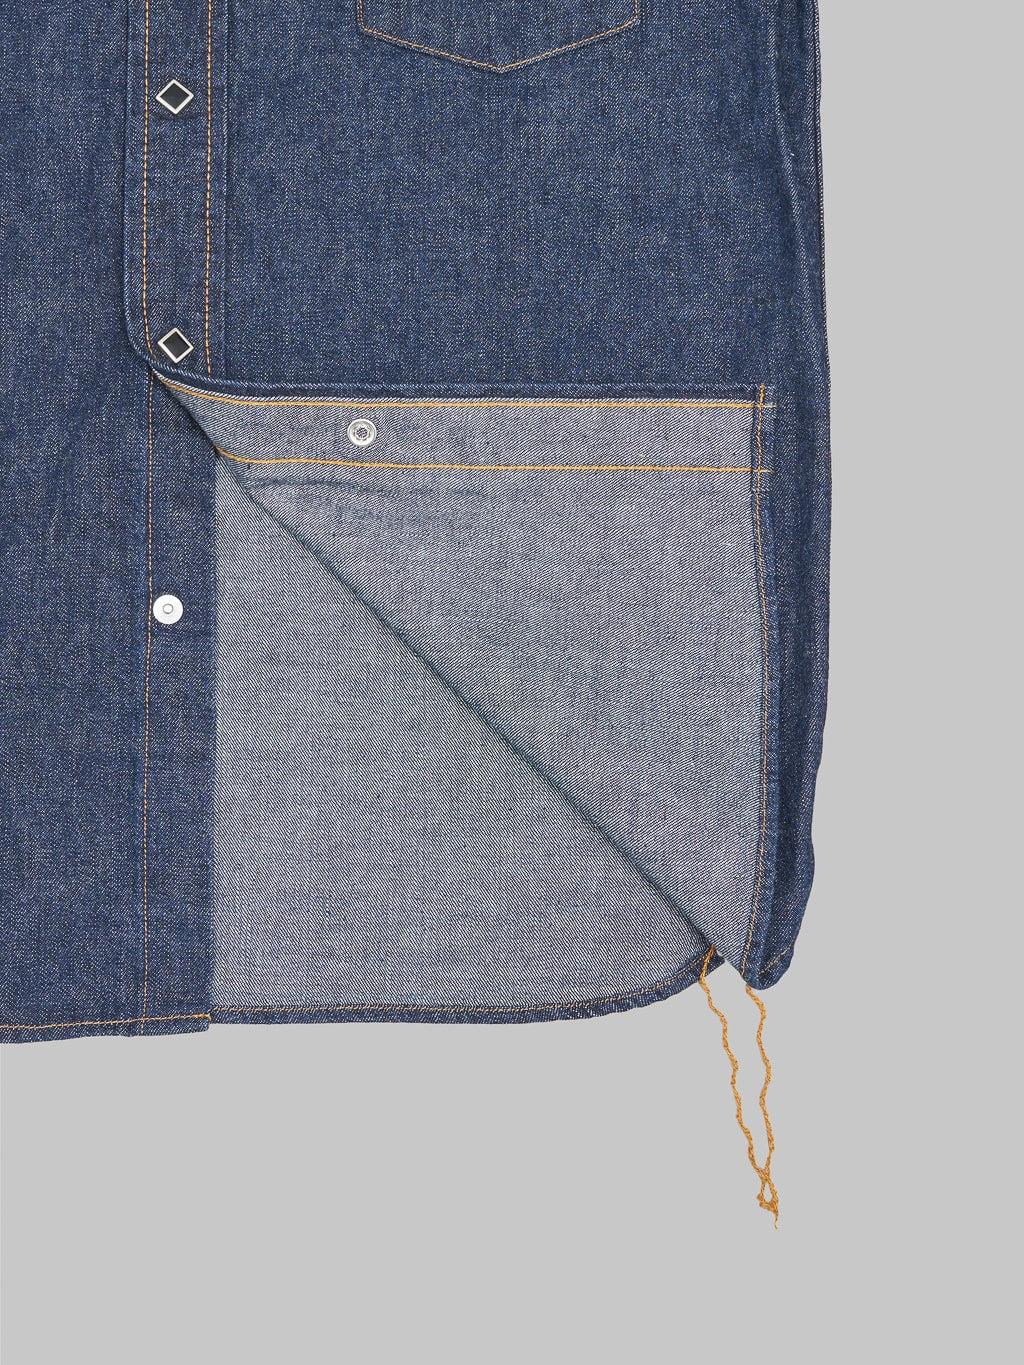 Samurai Jeans 10oz "Hisho SWD-L02-OVS" Selvedge Western Denim Shirt